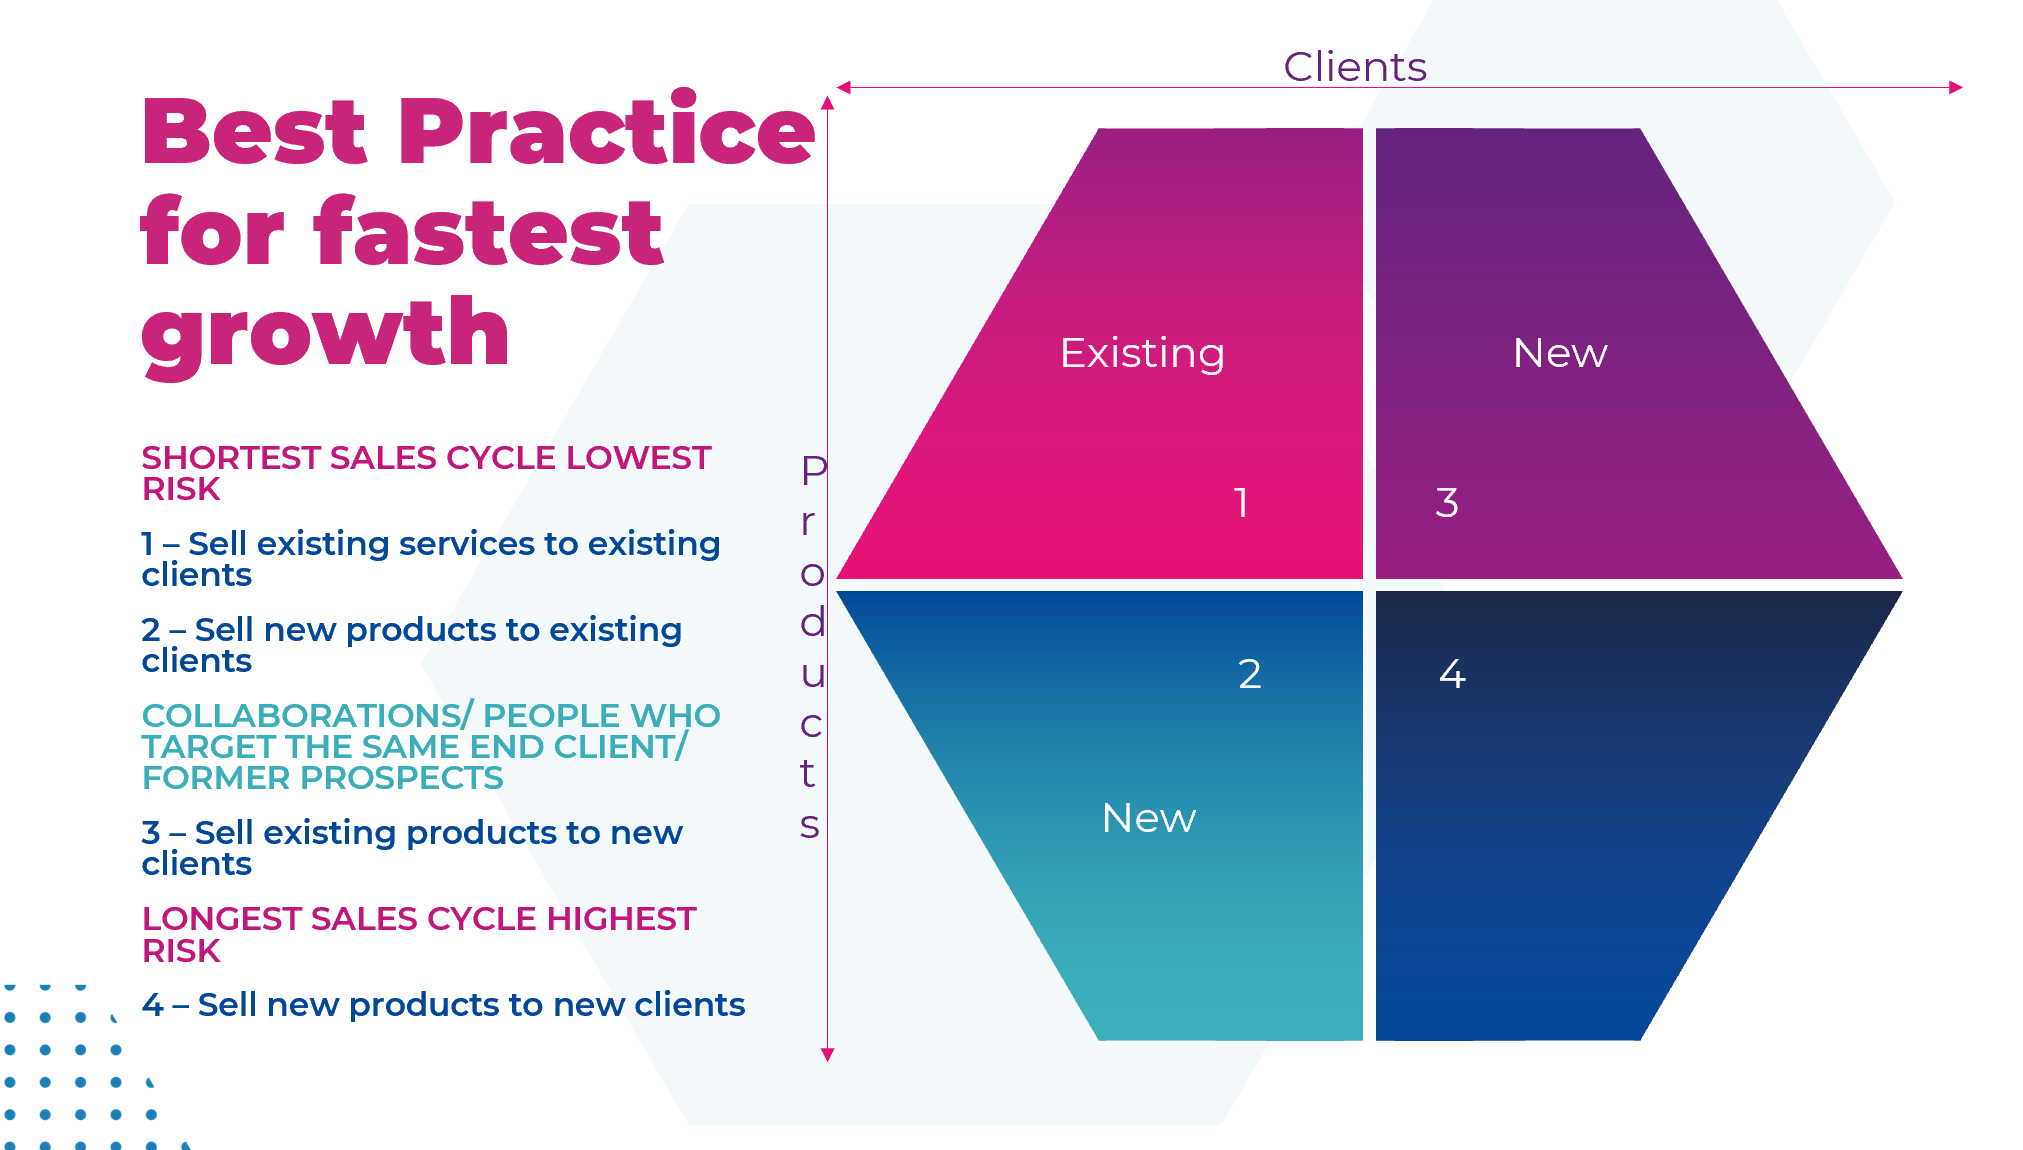 The Nfinite best practice growth sales cycle vs client base quadrant